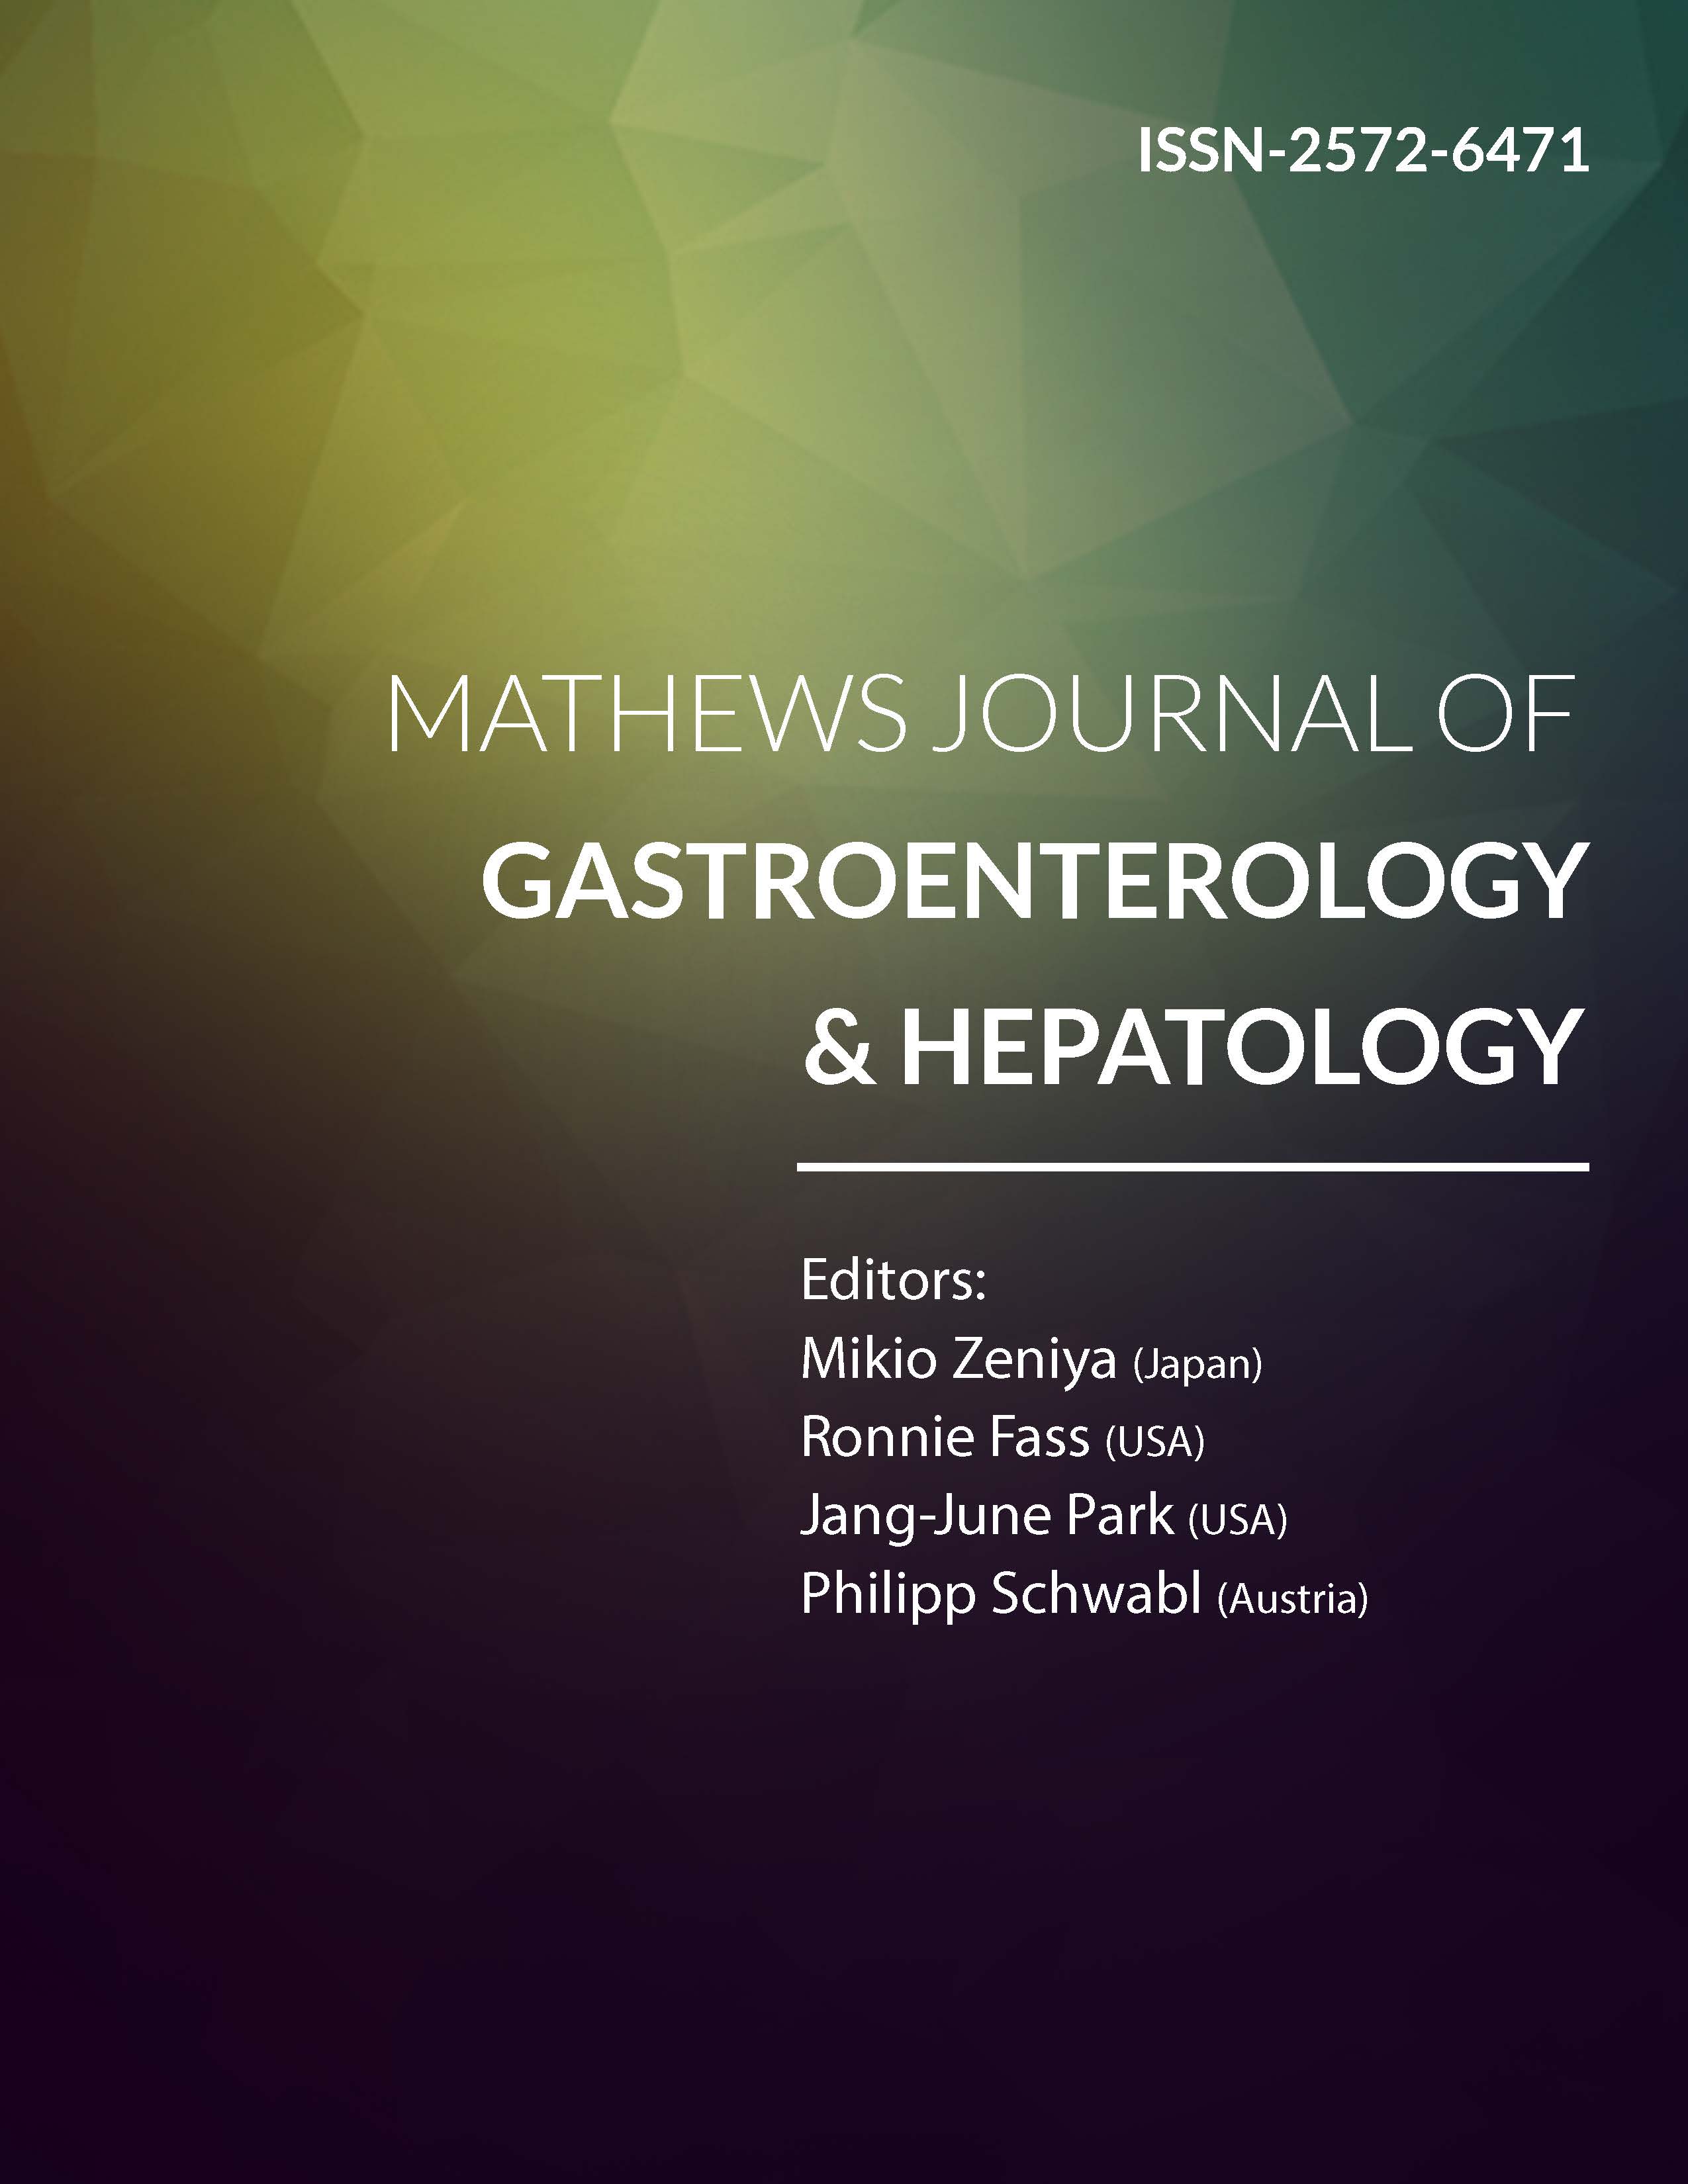 Mathews Journal of Gastroenterology & Hepatology